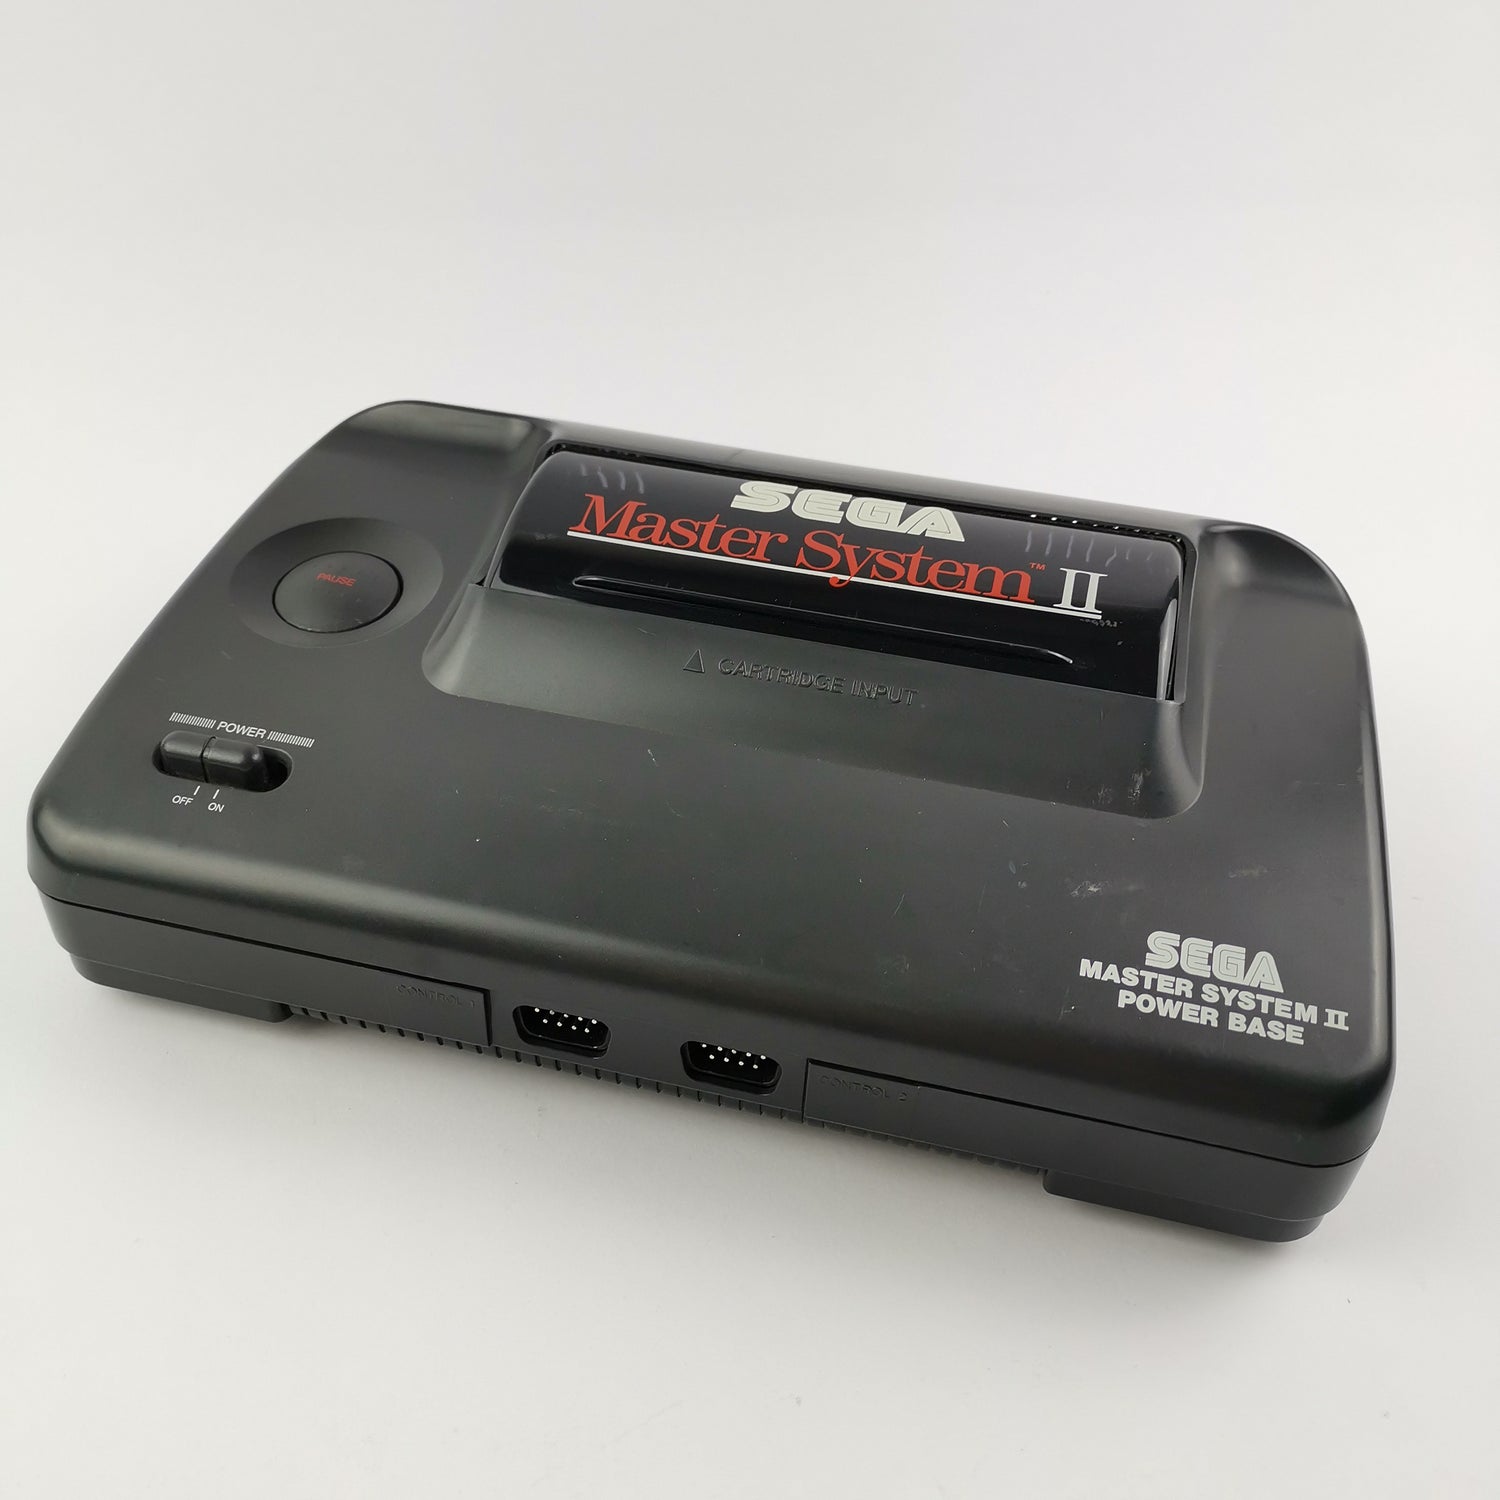 Sega Master System II mit Sonic, Controller u. Kabel - MS Console